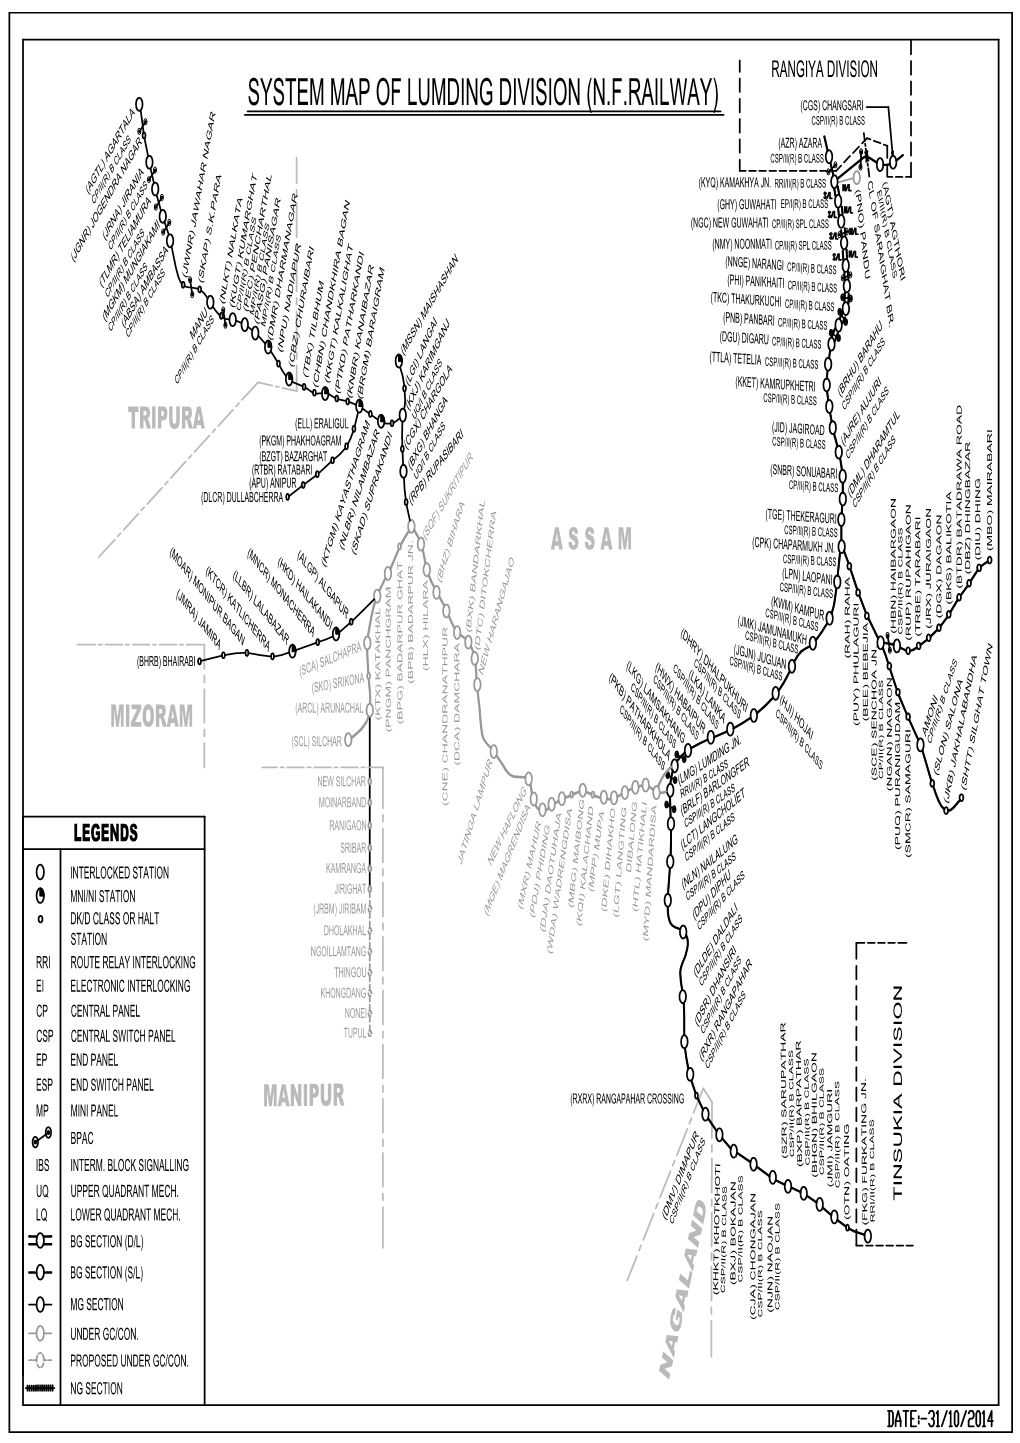 System Map of Lumding Division (N.F.Railway) (Apu) Anipur (Rtbr) Ratabari Mp/I(R) B Class (Pkgm) Phakhoagram (Bzgt) Bazarghat (Pasg) Panisagar